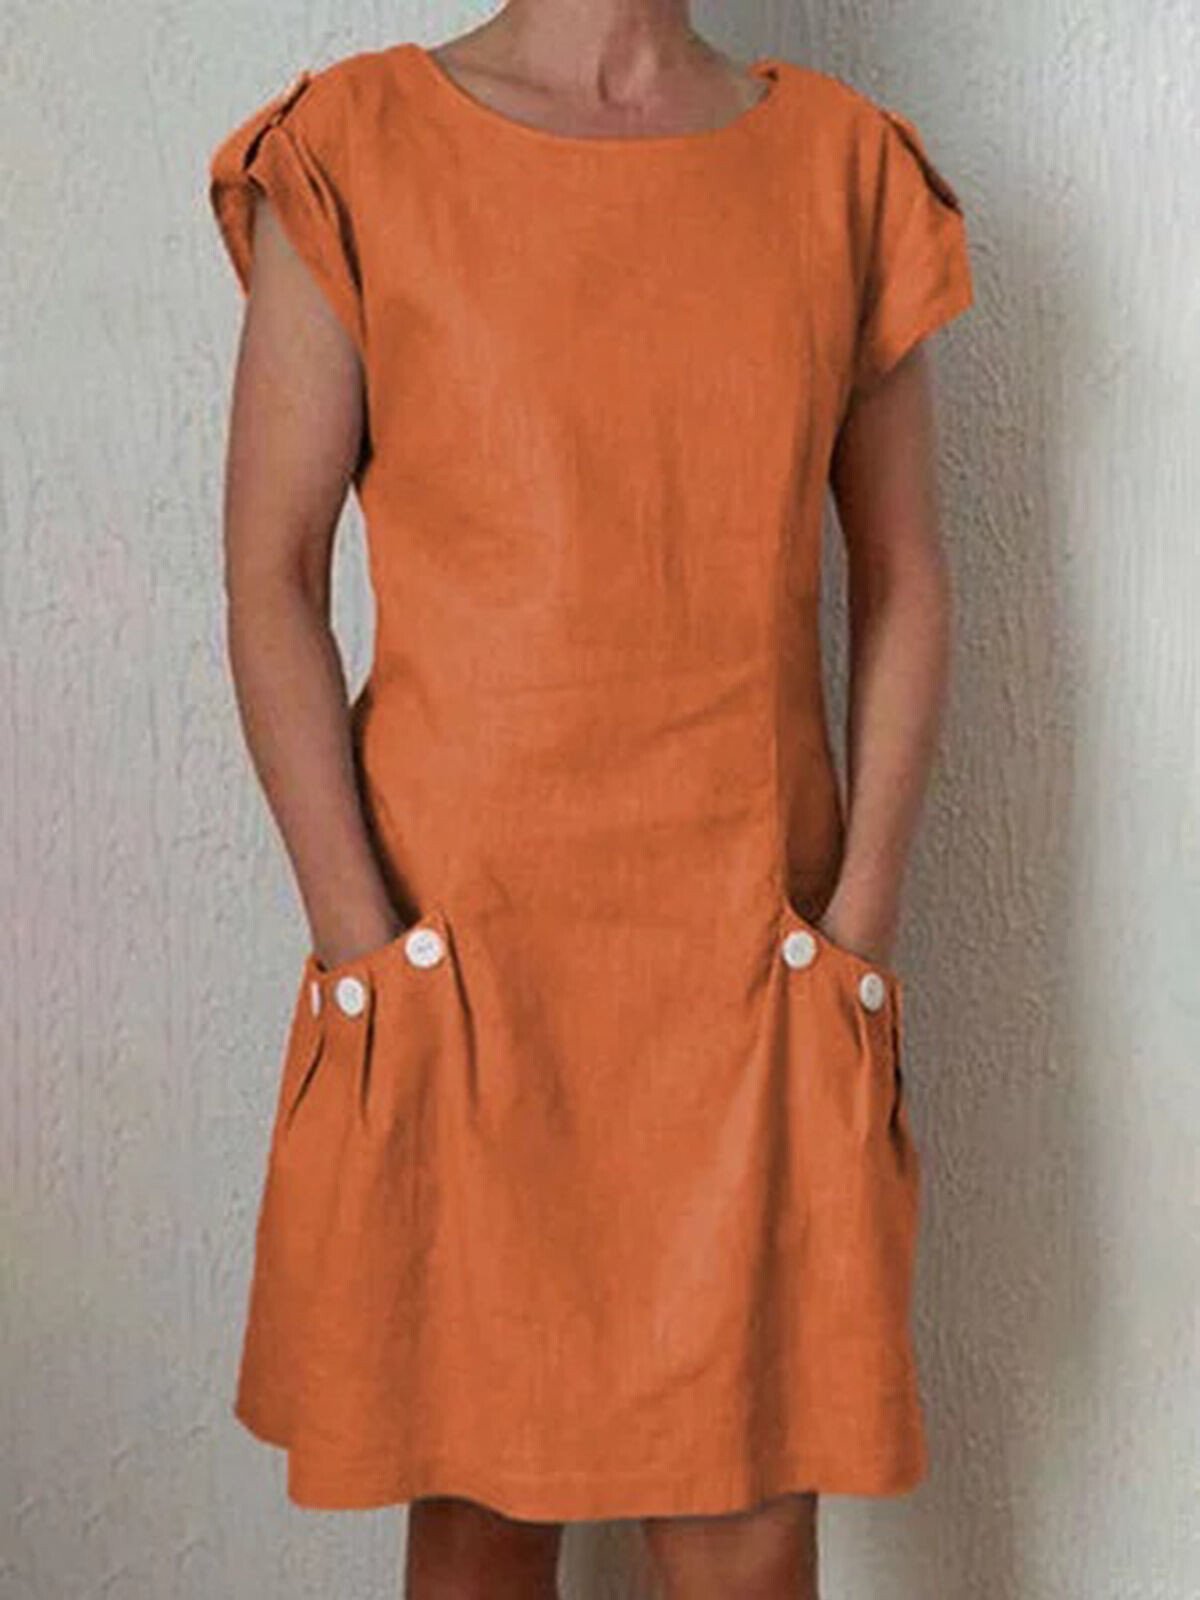 Women's Pure Color Pleated Pocket Cotton Dress